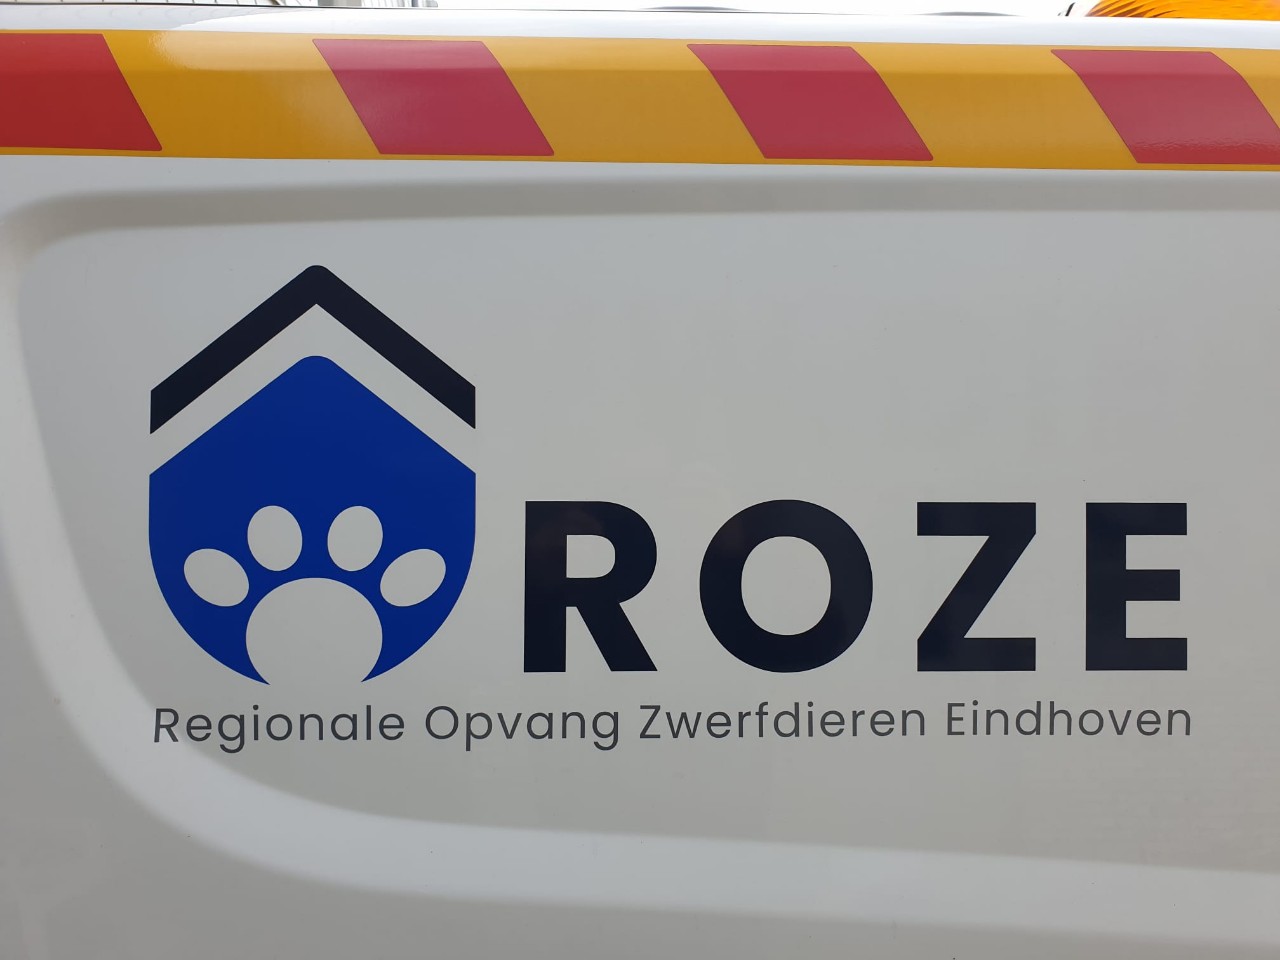 Regionale opvang zwerfdieren Eindhoven #253 (24)